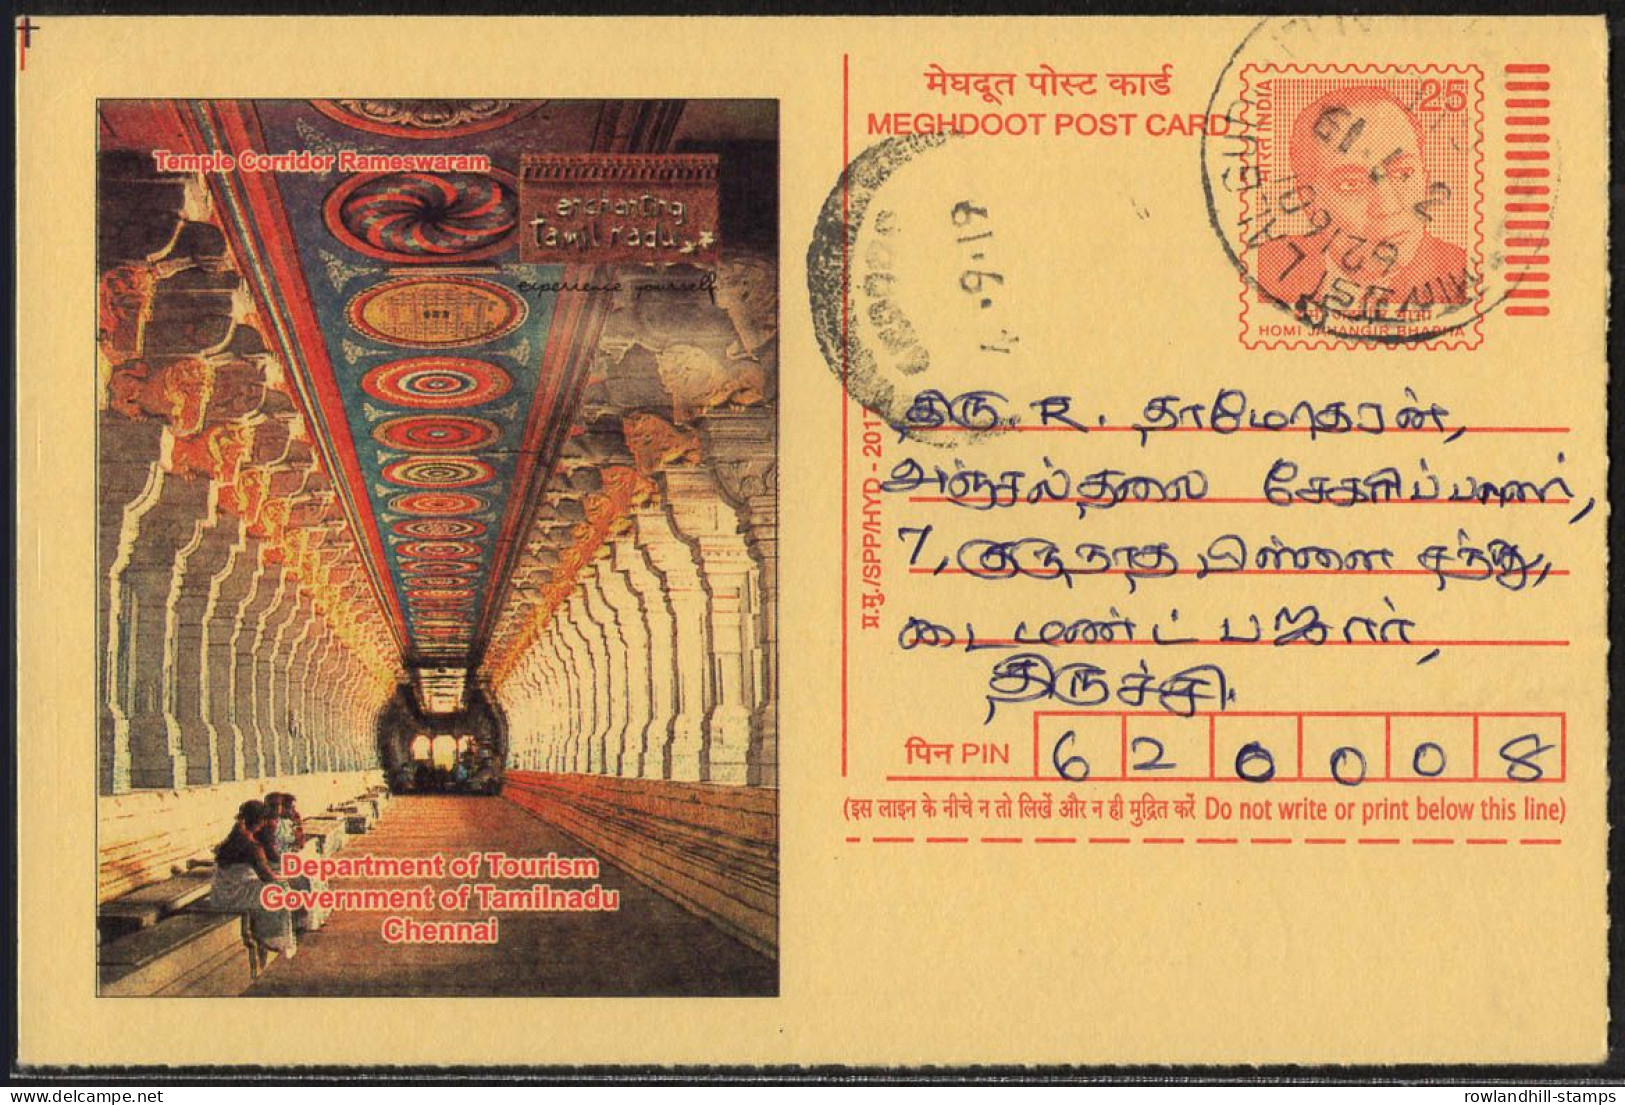 India, 2017, Temple Corridor RAMESWARAM, Meghdoot Post Card, Hinduism, Tourism, Tamilnadu, Architecture, Religion, A23 - Hinduism